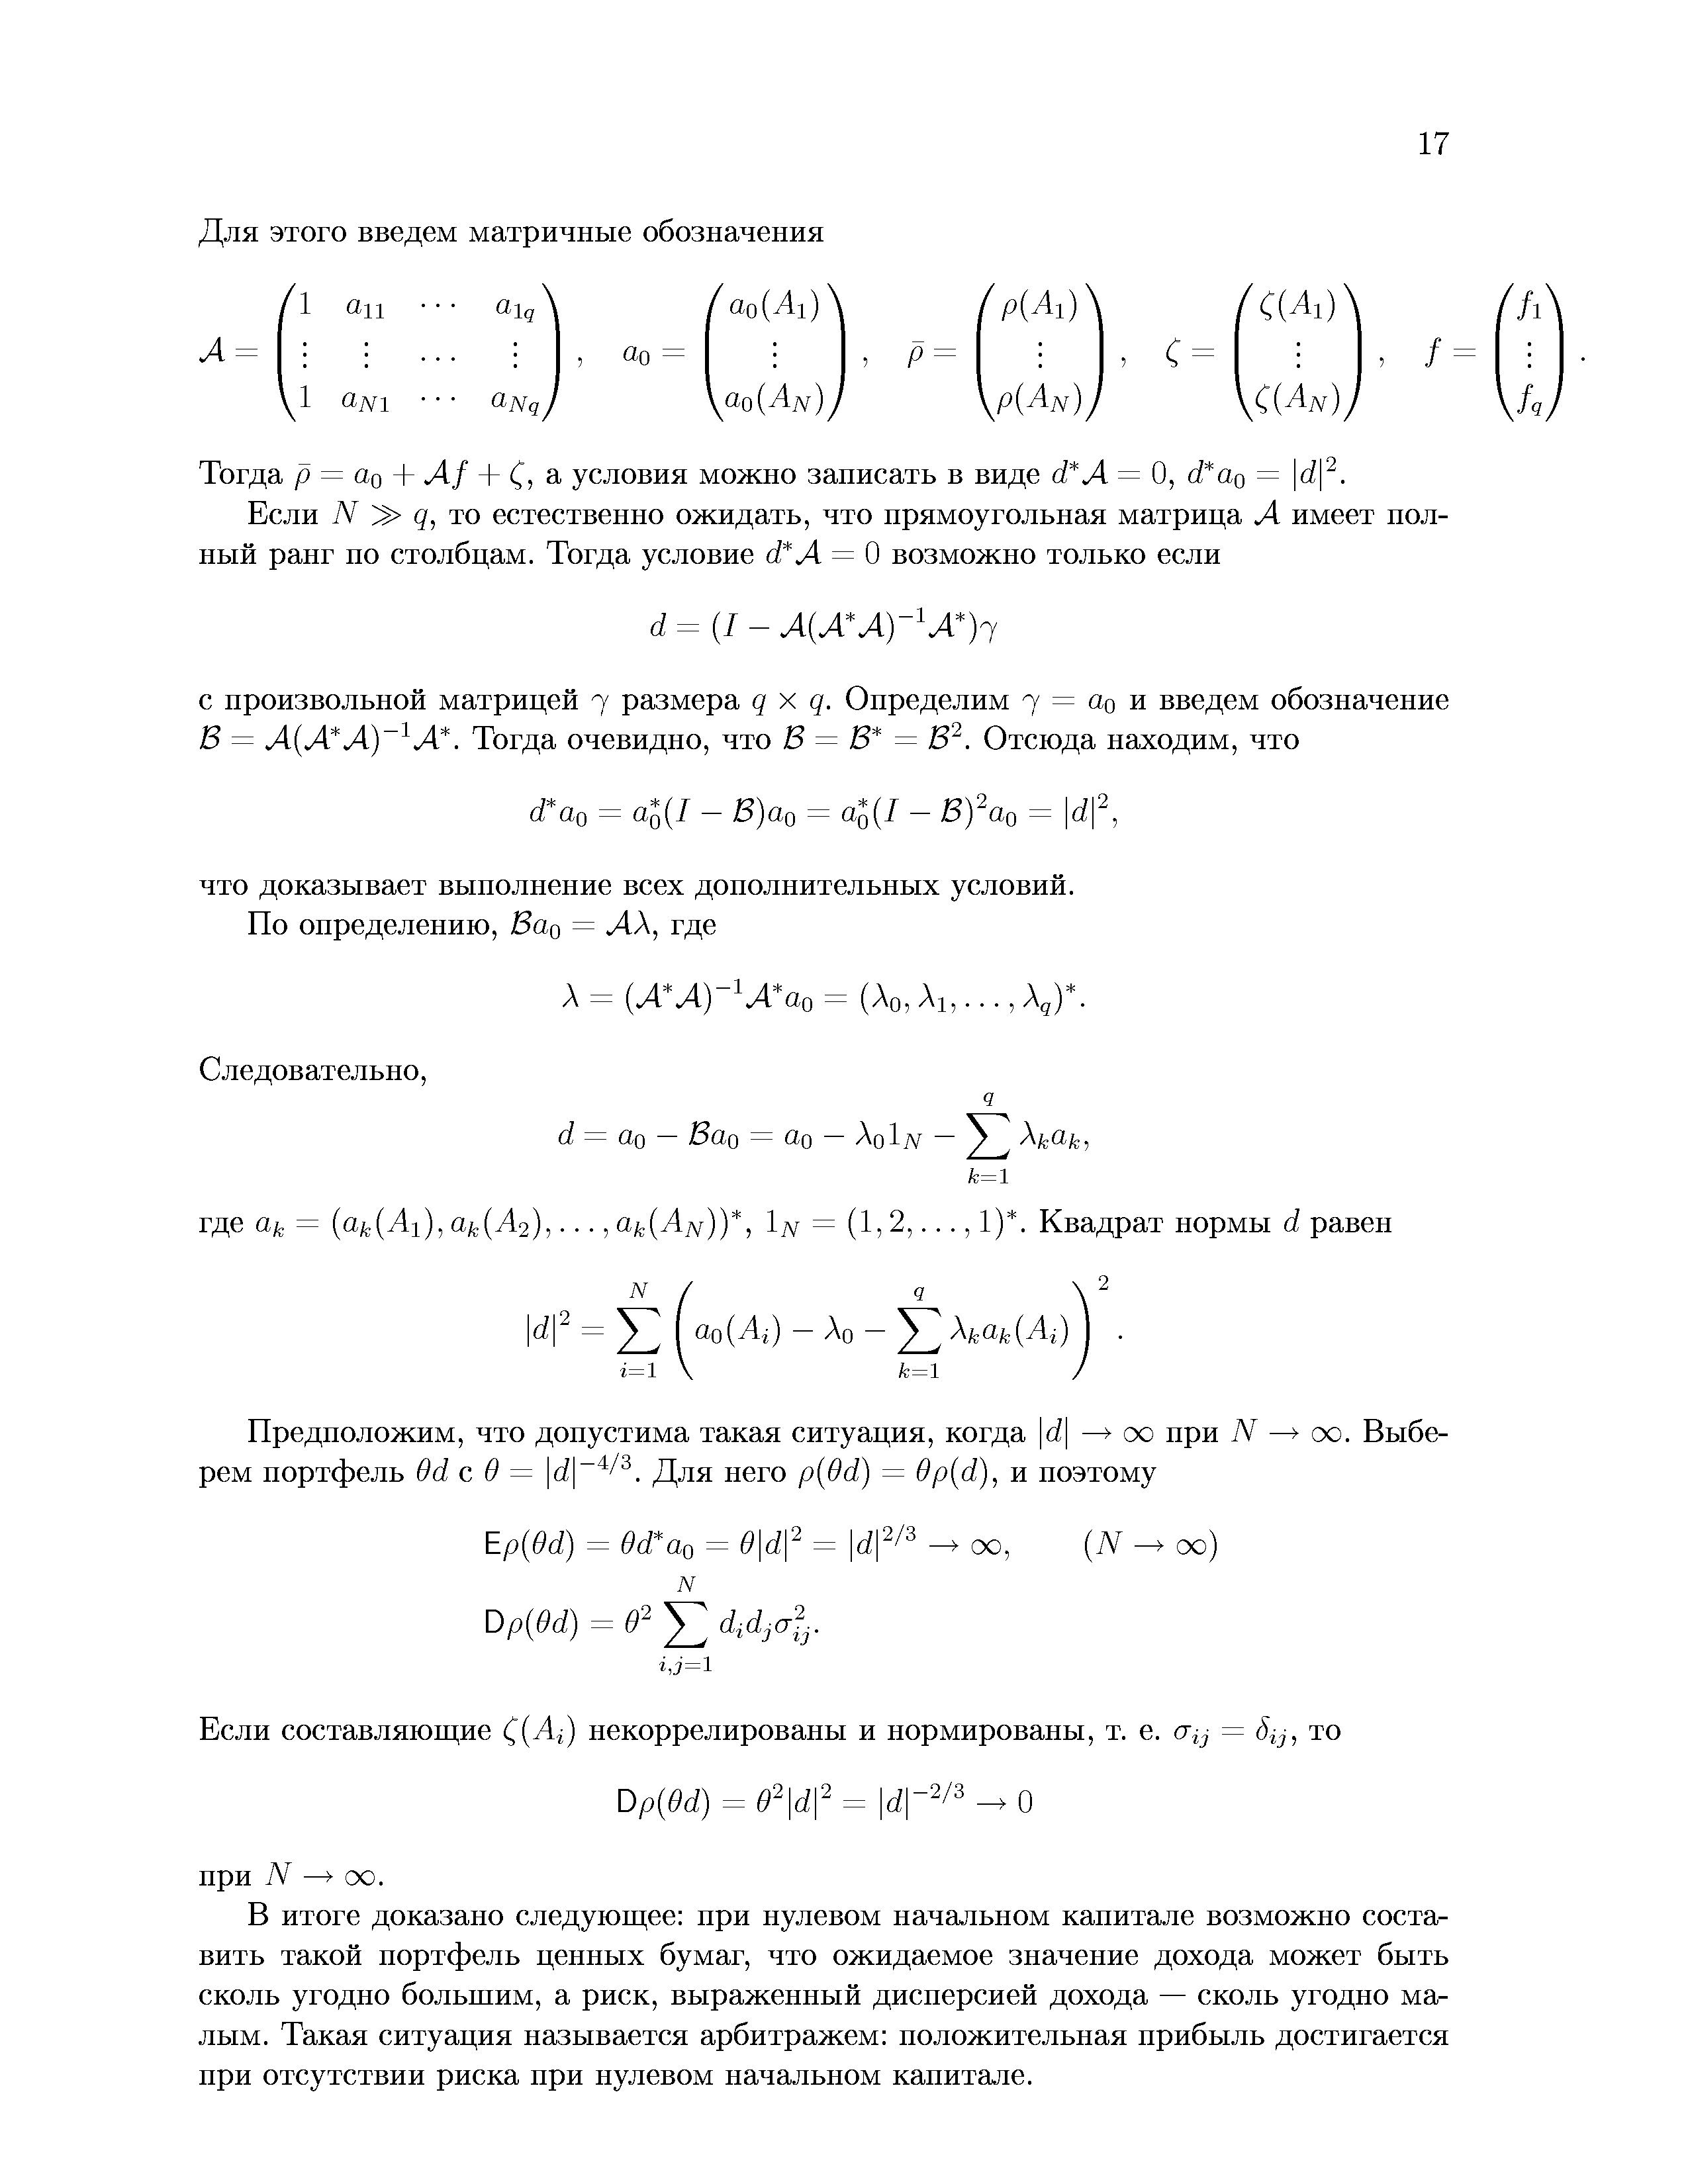 Тогда p = a0 + Af + a условия можно записать в виде d A = 0, d a0 = d 2.
